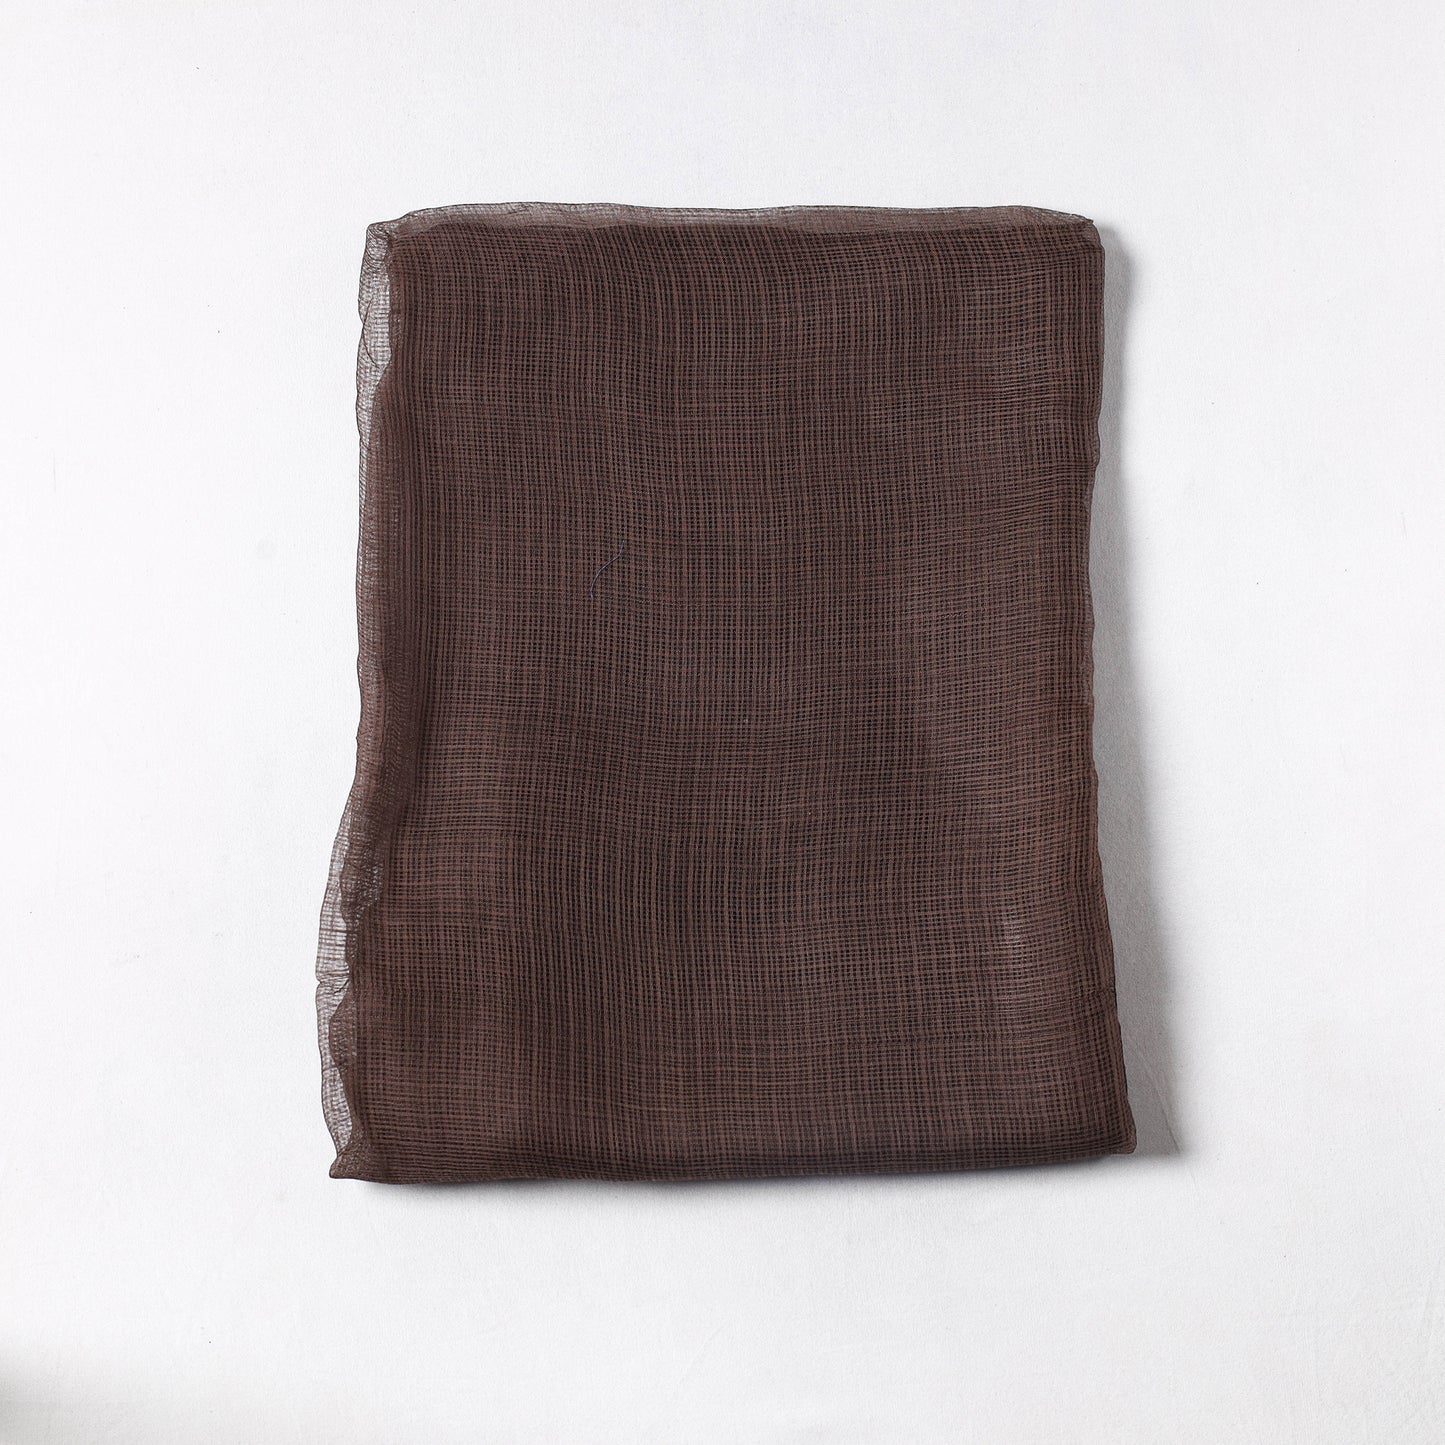 Brown - Kota Doria Weave Plain Cotton Precut Fabric (1 meter) 71